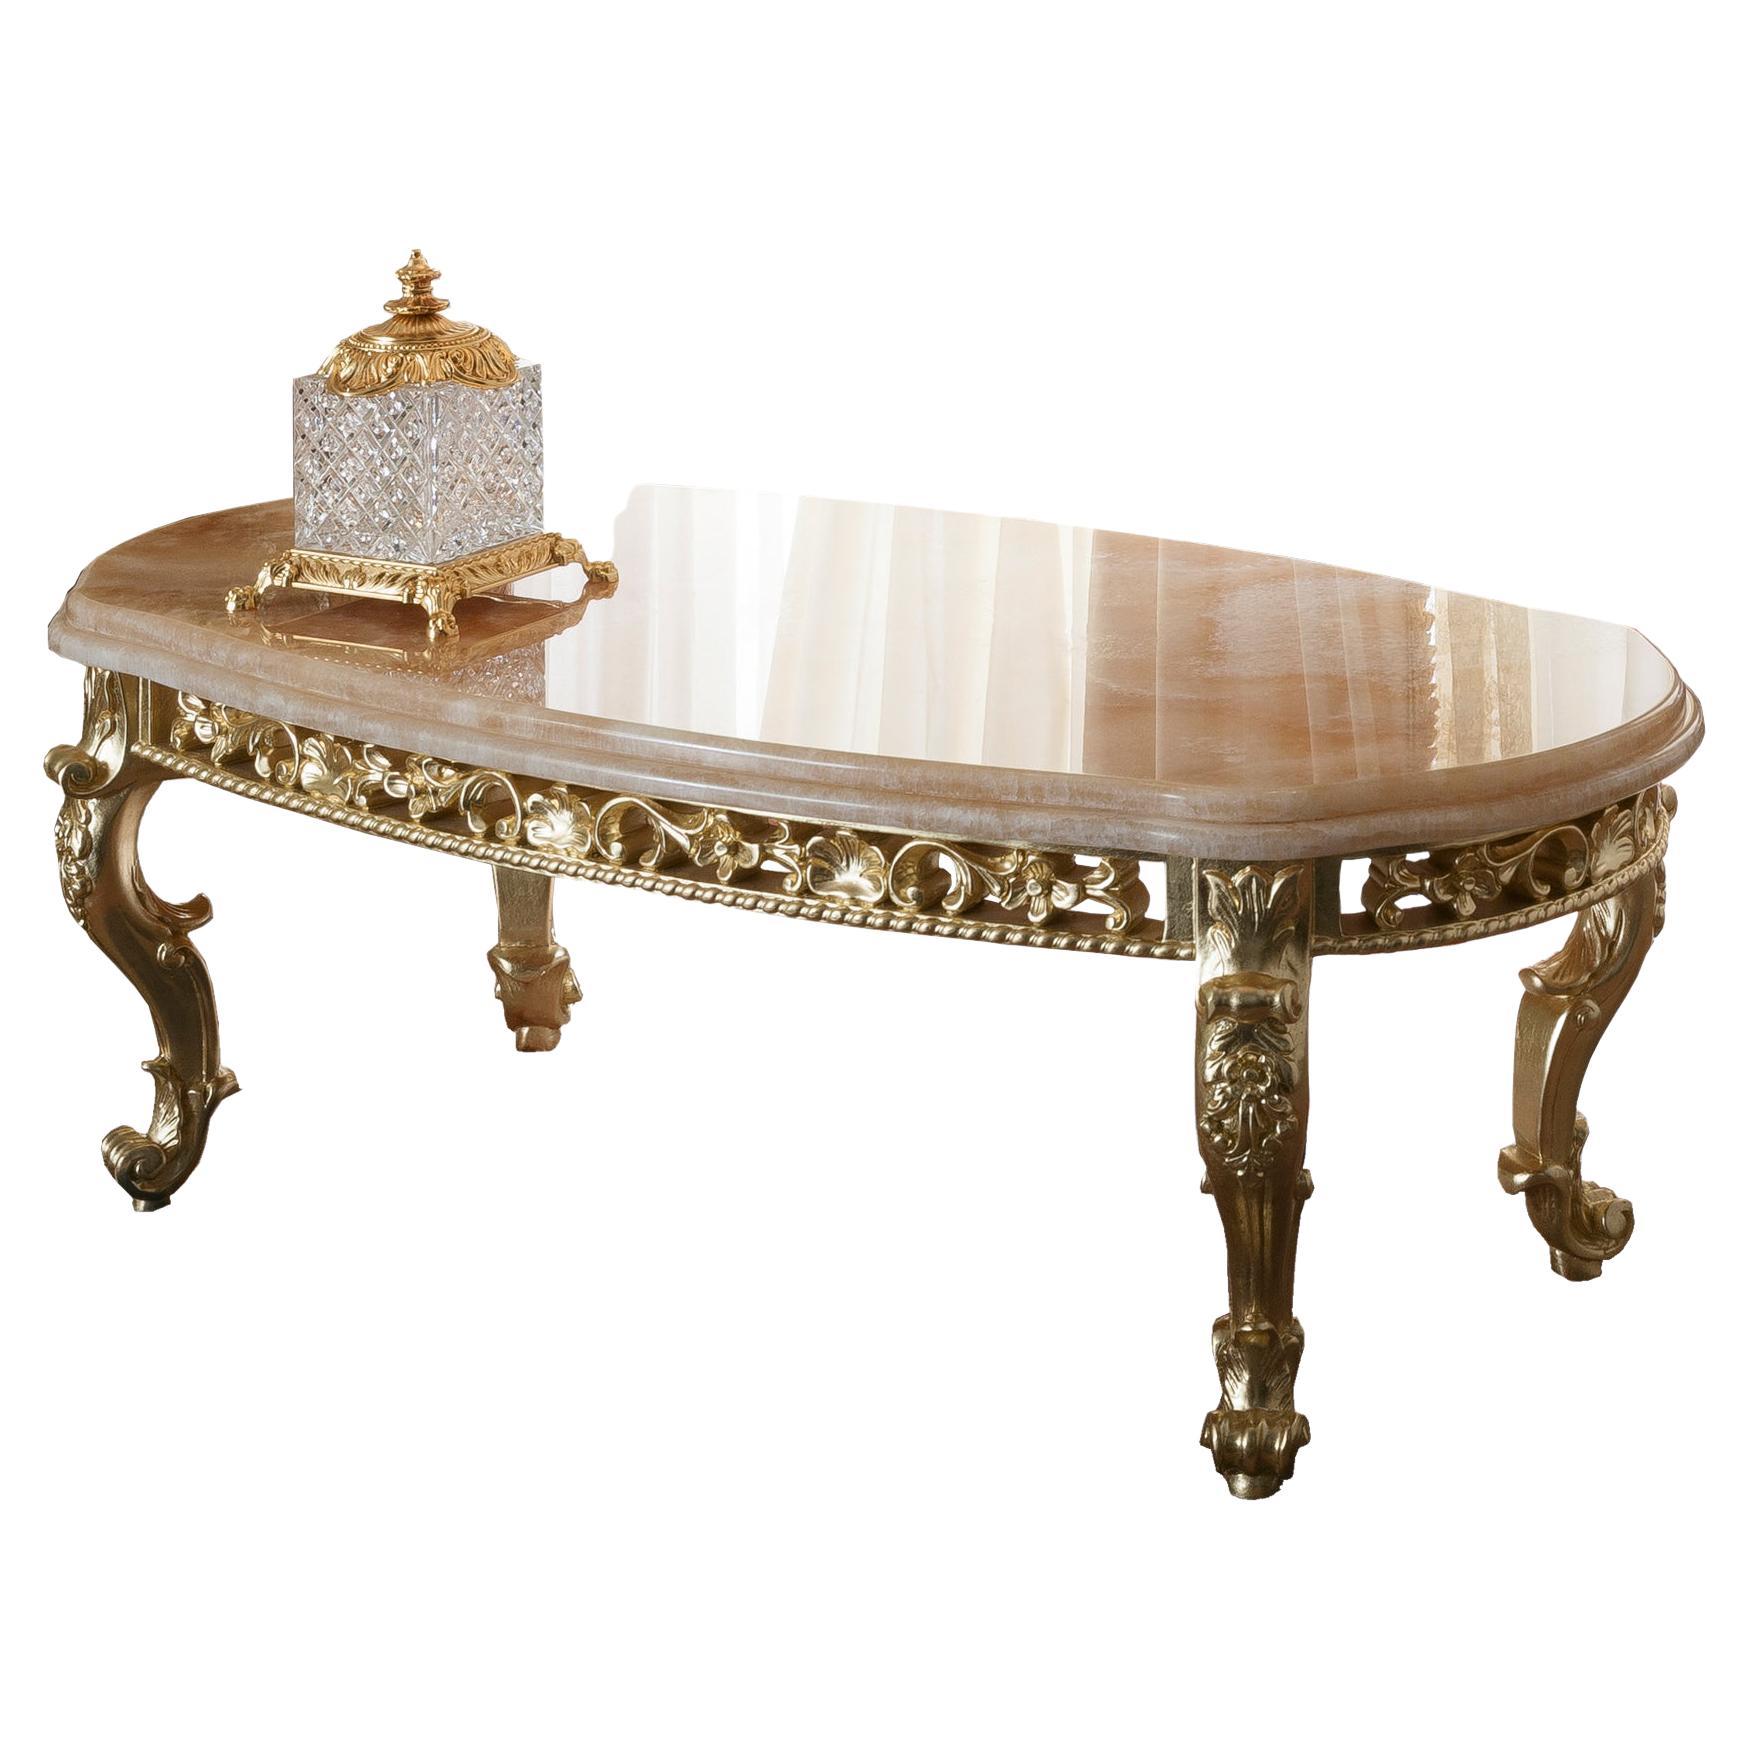 Table basse ovale baroque en onyx miel poli par Modenese